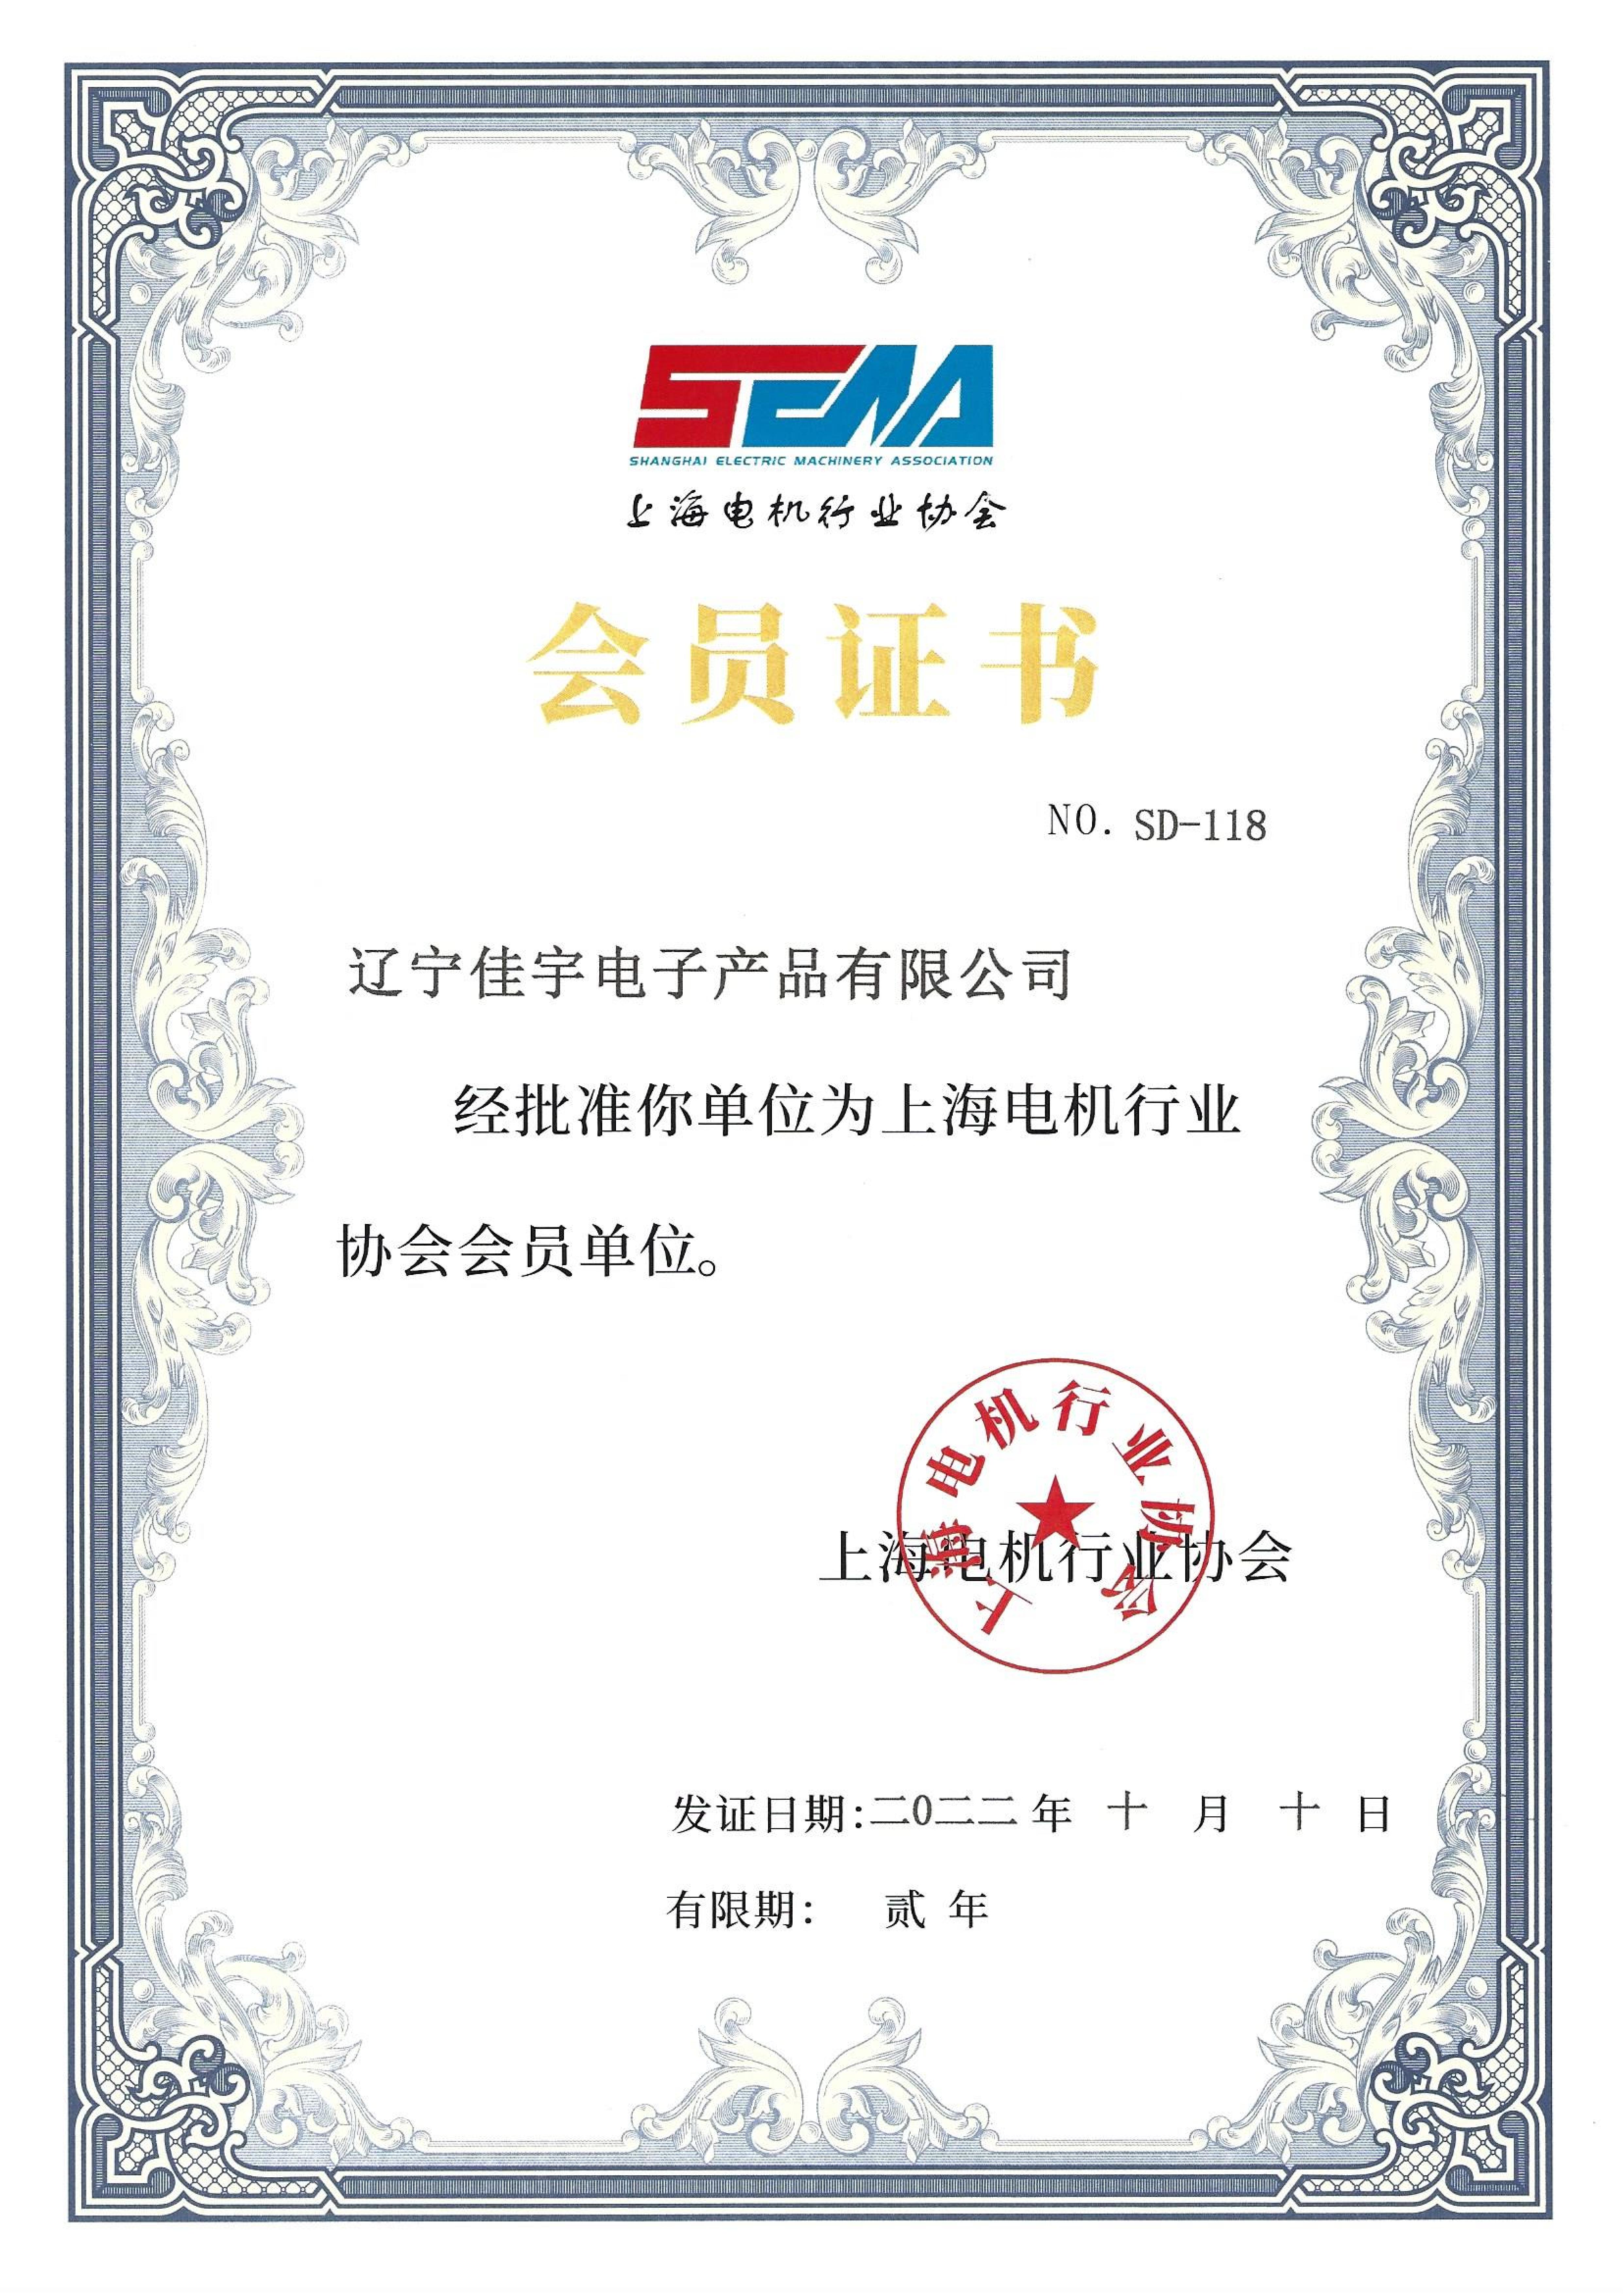 Membership of Shanghai Electrical Machinery Industry Association